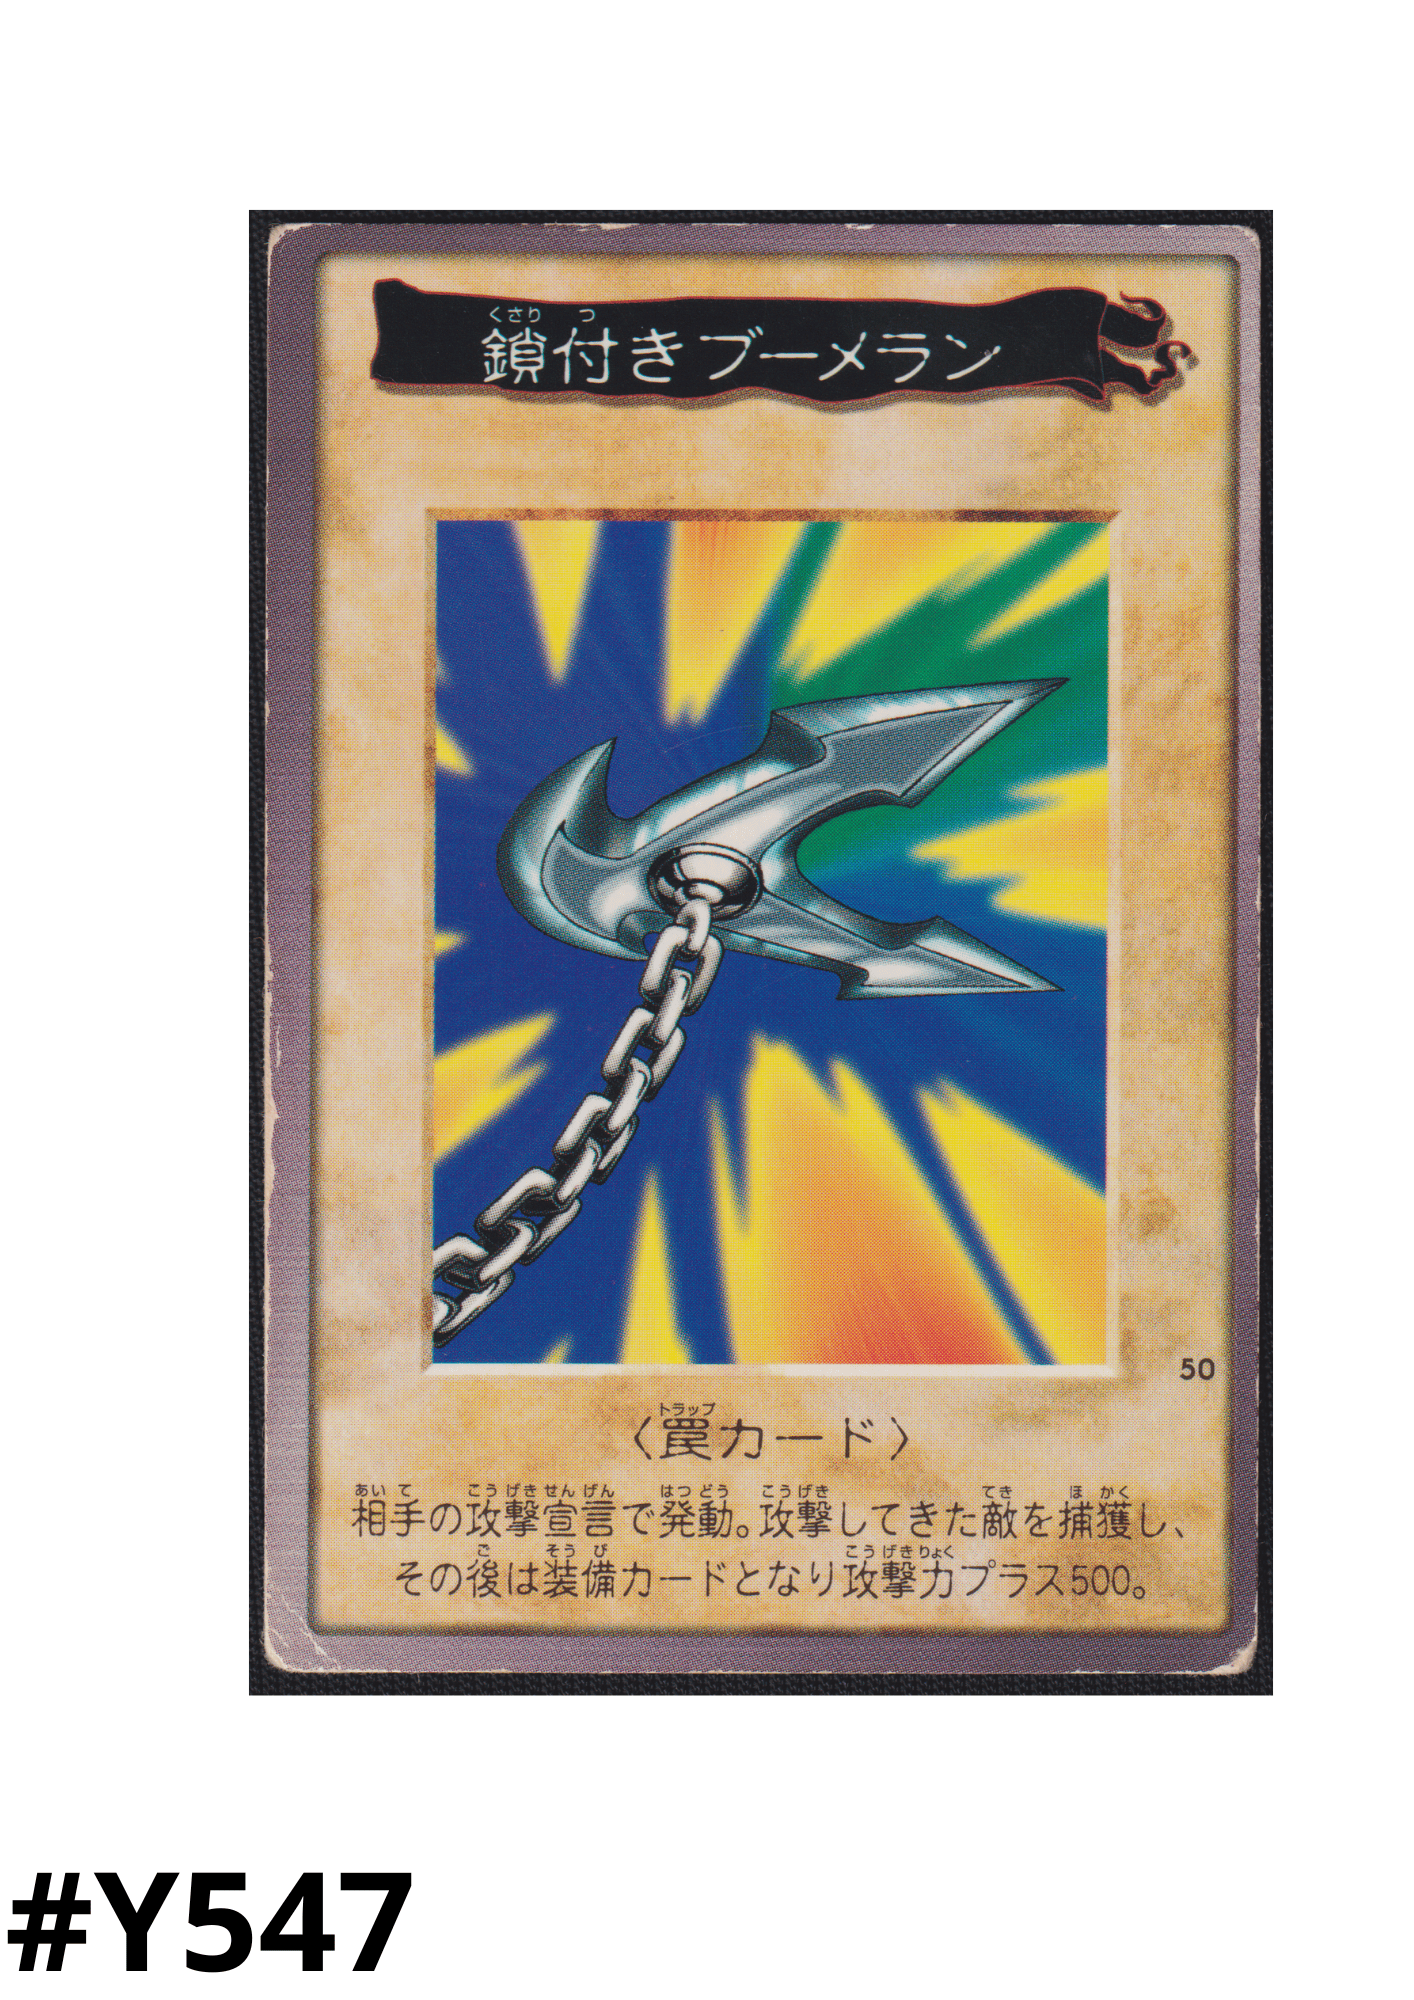 Yu-Gi-Oh! | Bandai Card No.50 | Kunai with Chain ChitoroShop